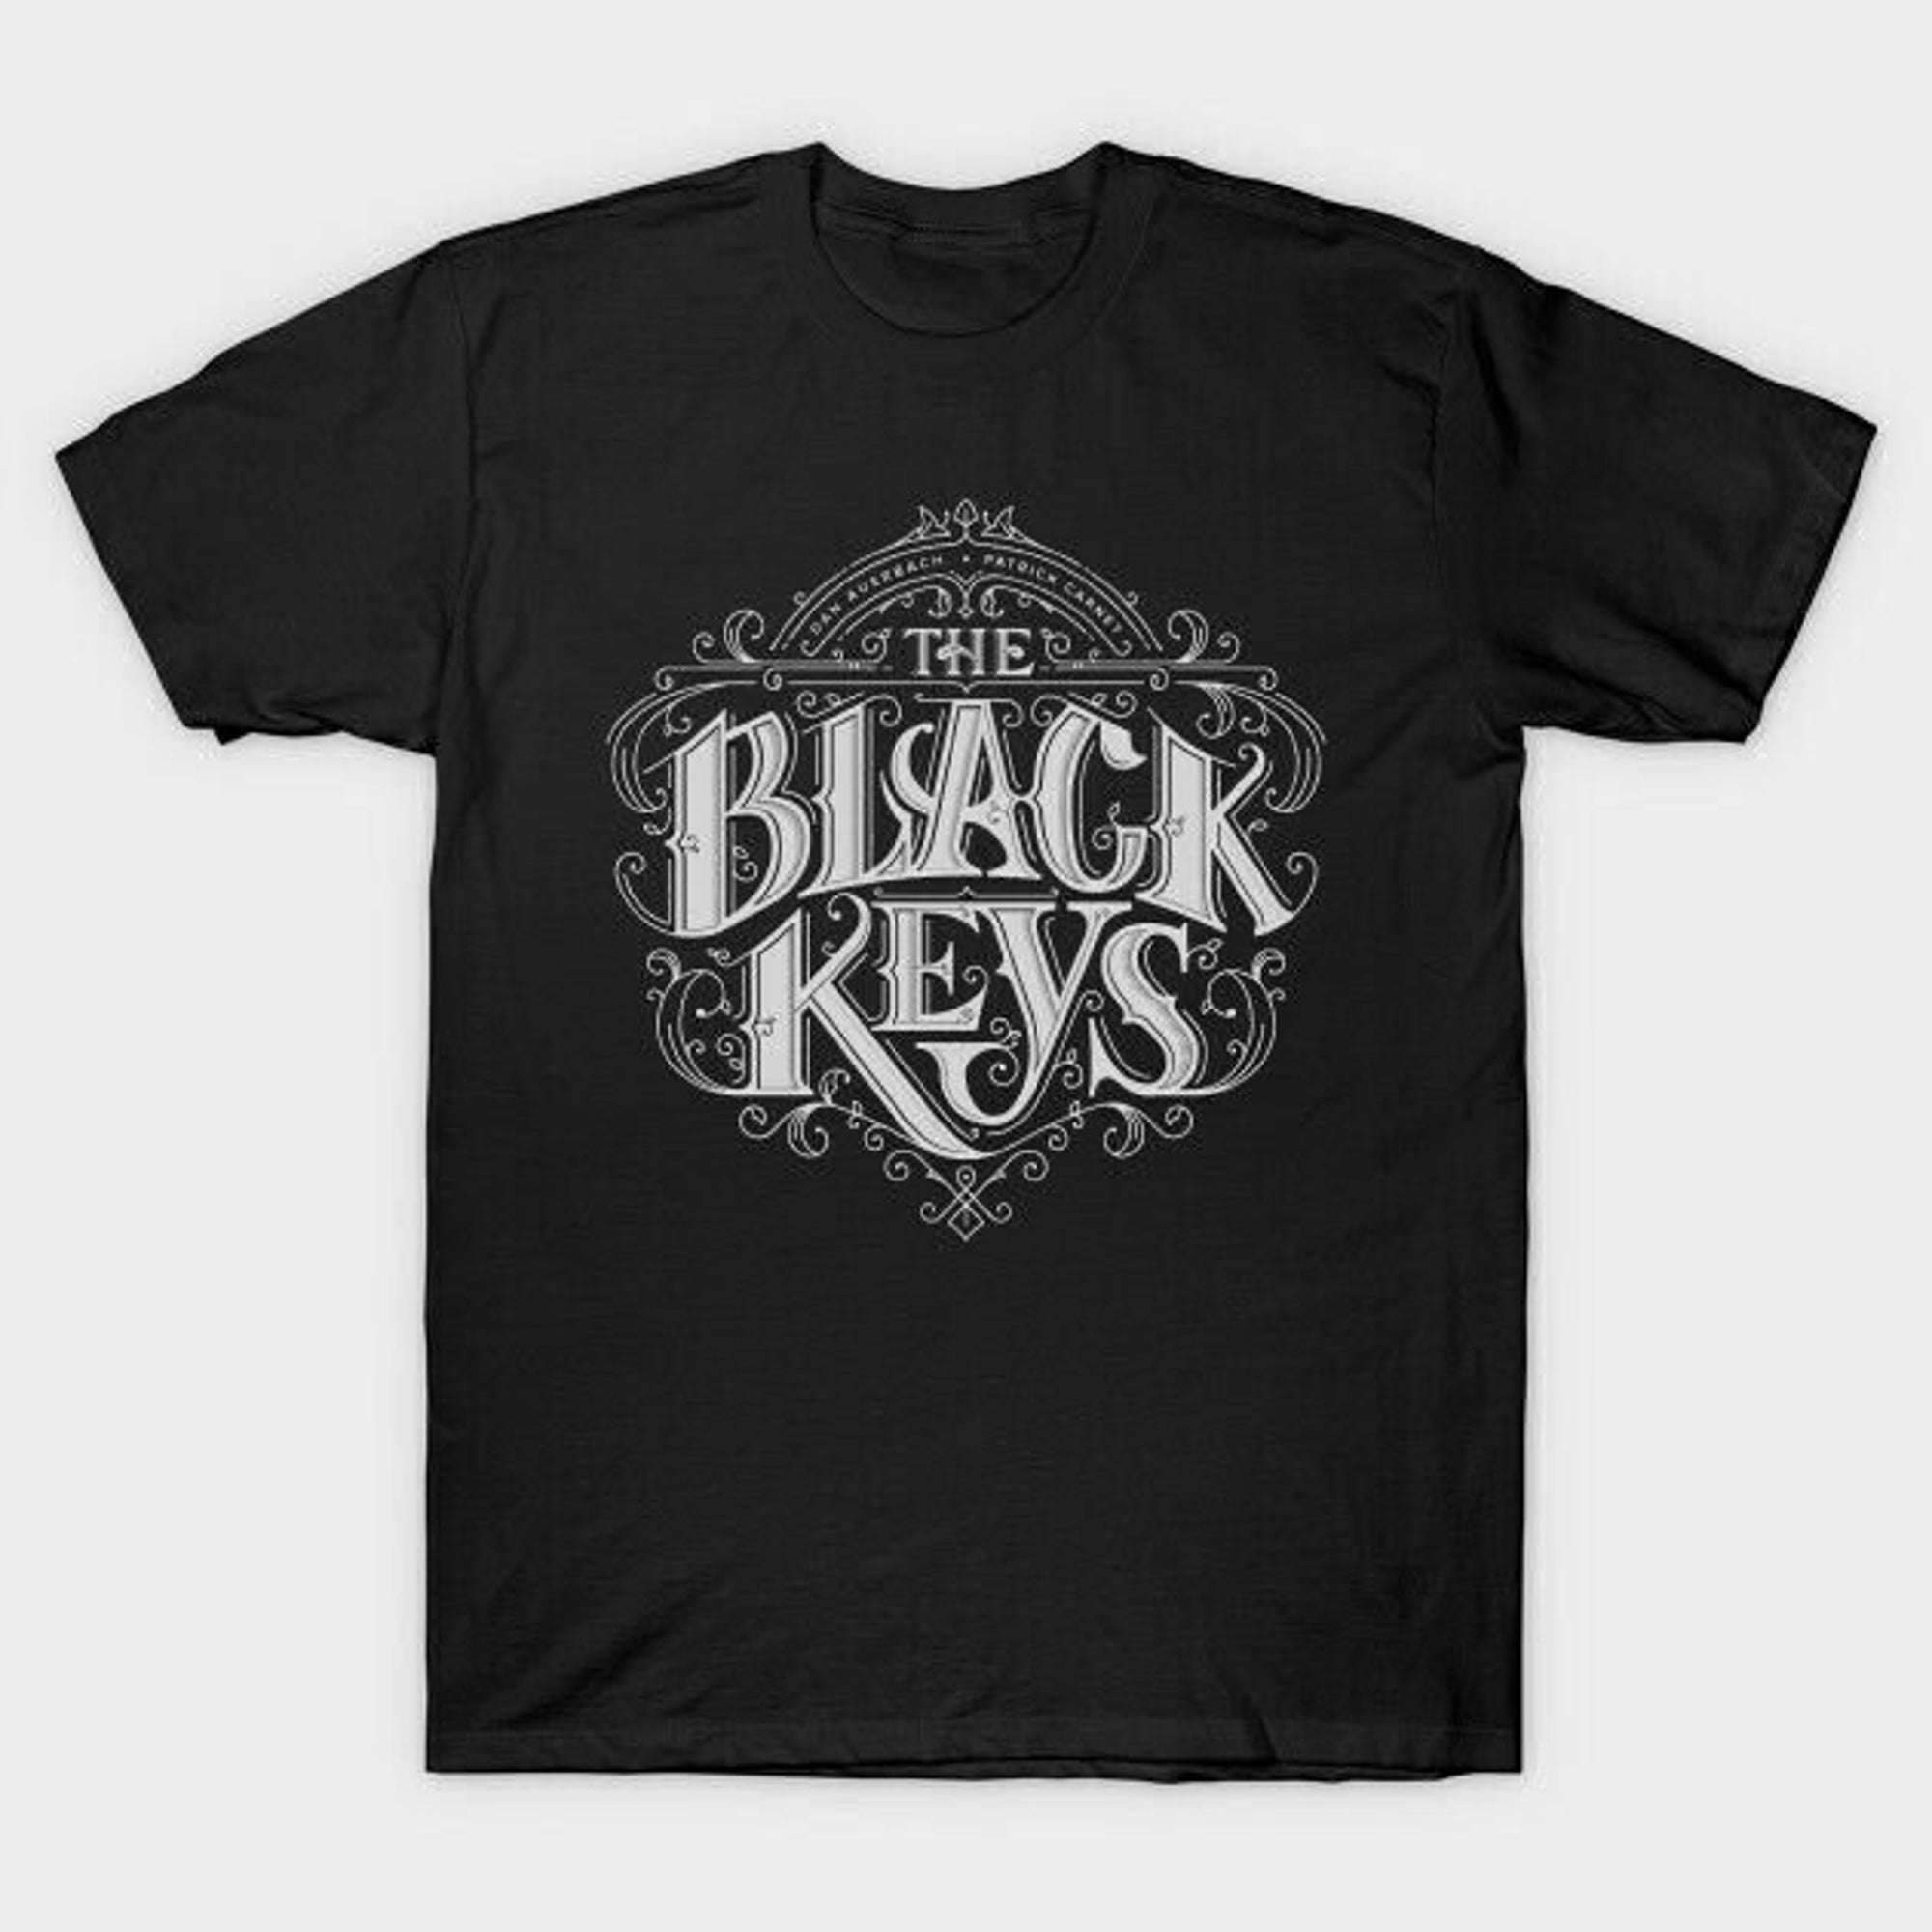 black keys reverse Shirt